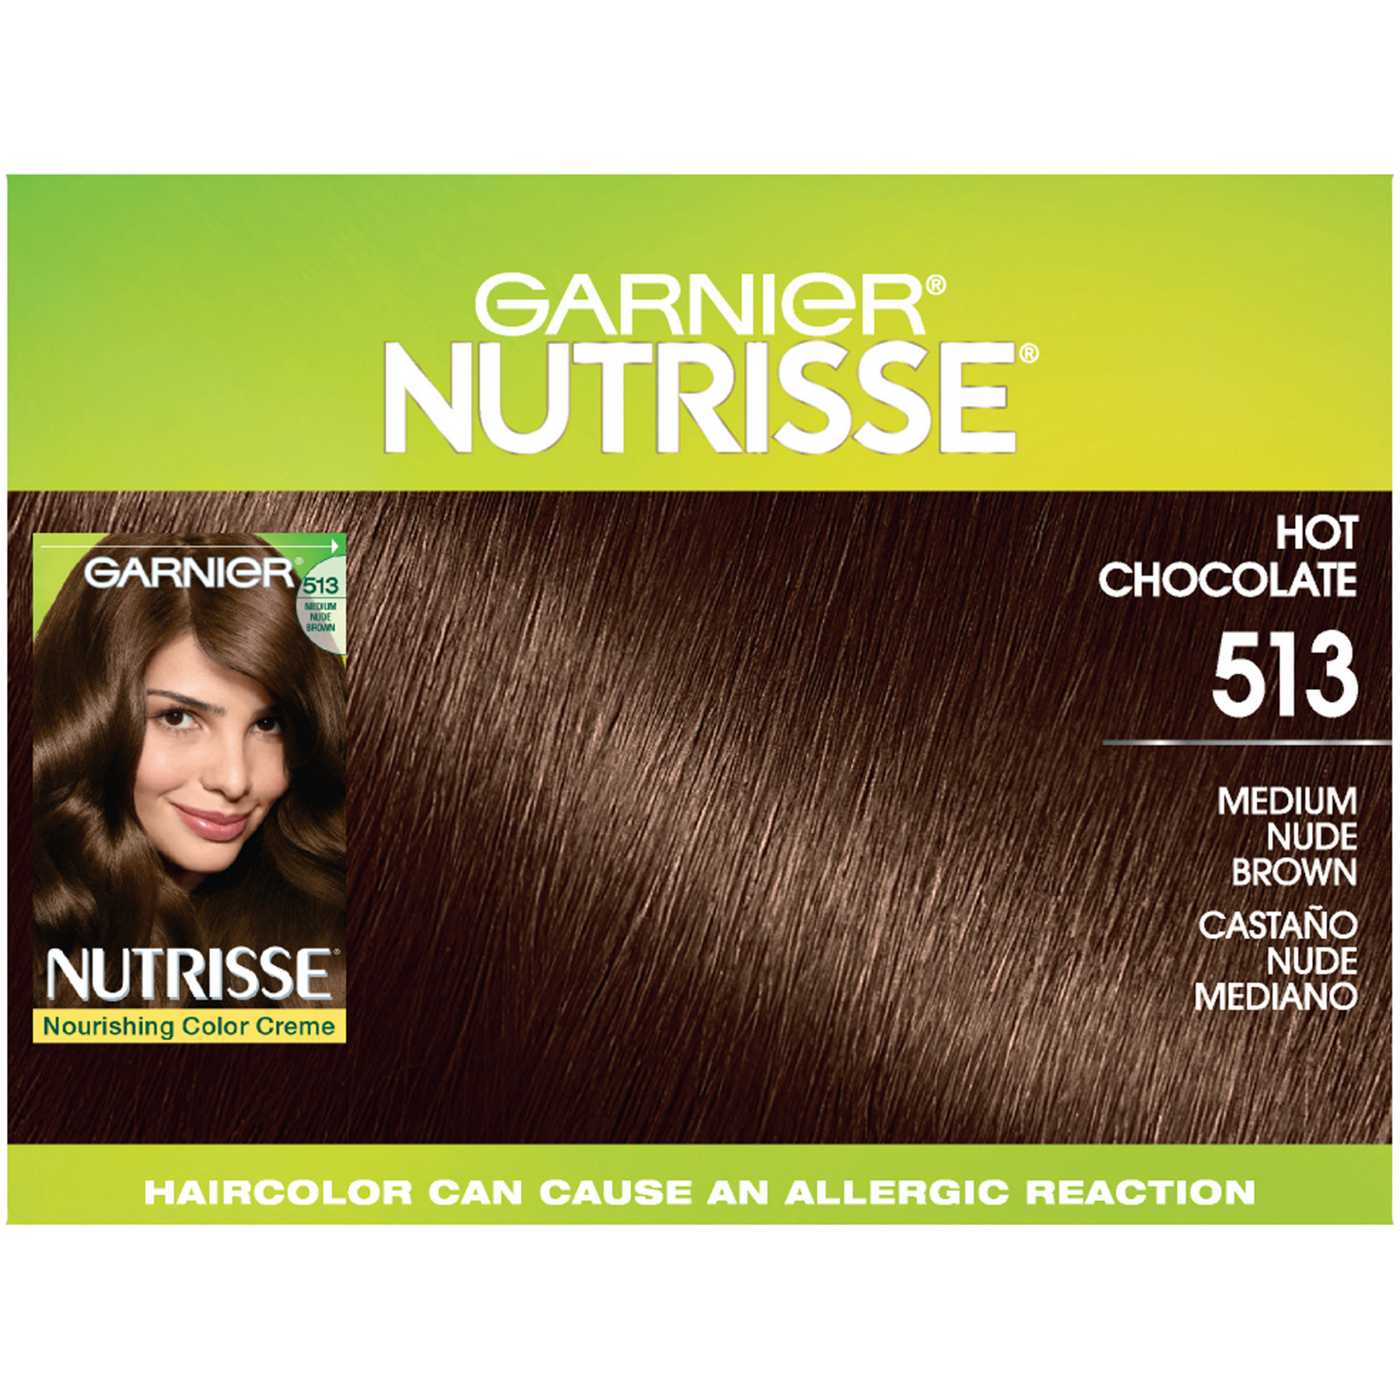 Garnier Nutrisse Nourishing Hair Color Creme with Triple Oils 513 Medium Nude Brown; image 7 of 8